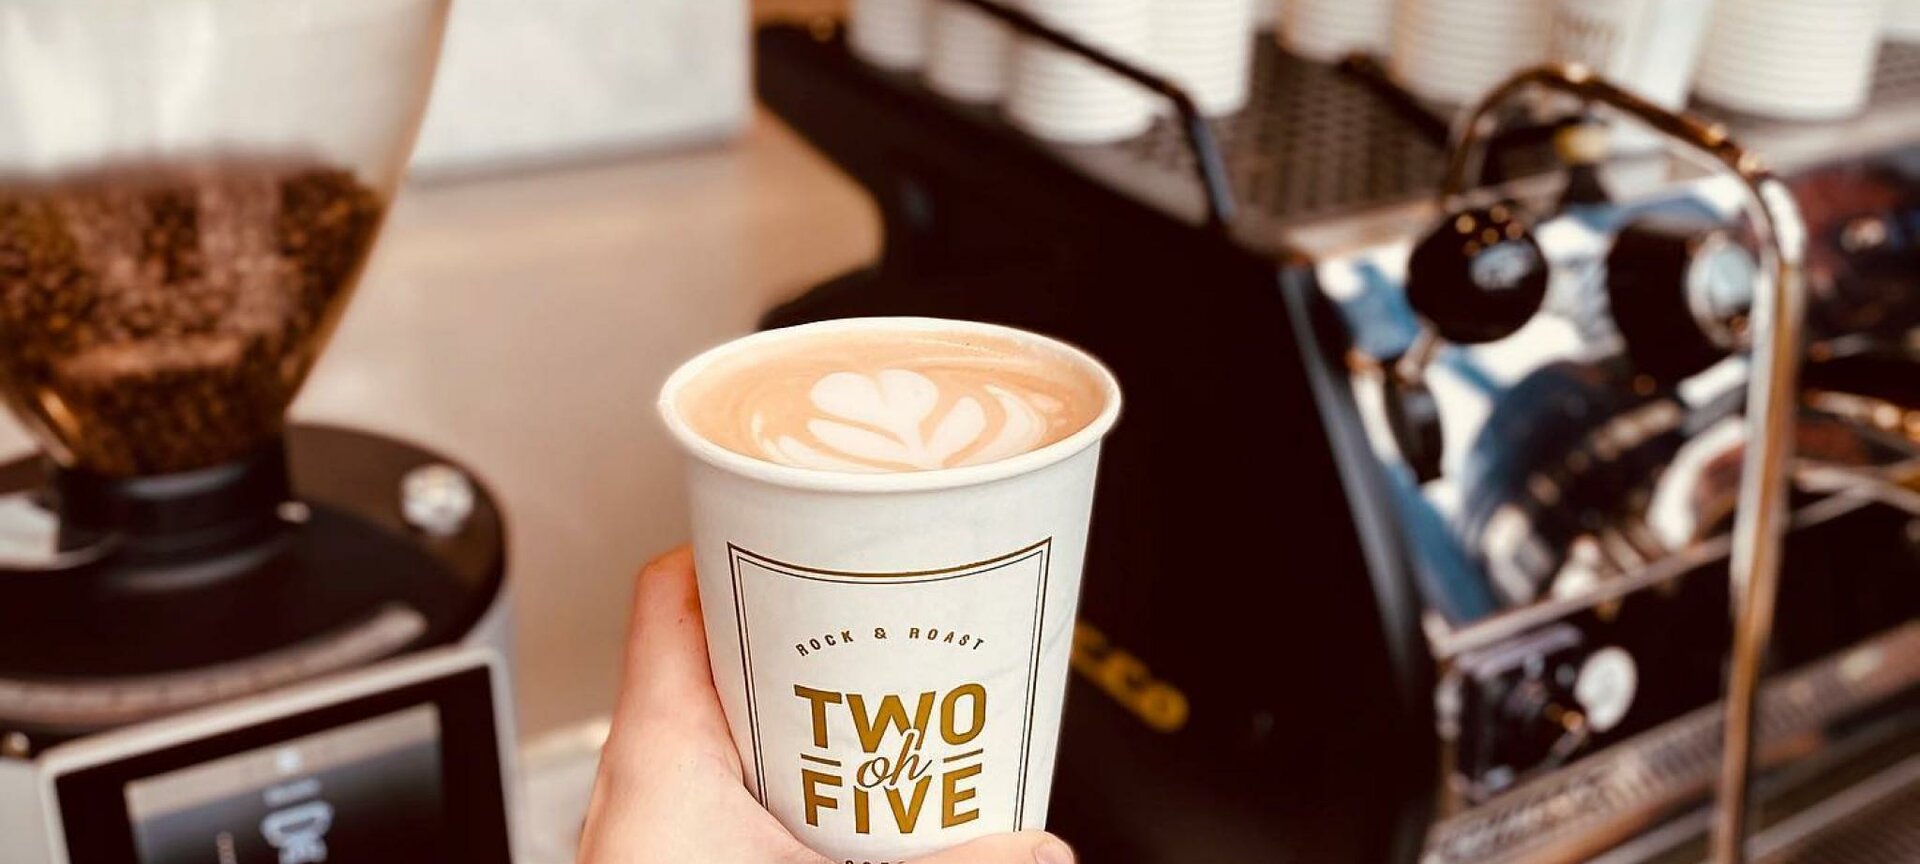 Two Oh Five coffee bar - Take away coffee